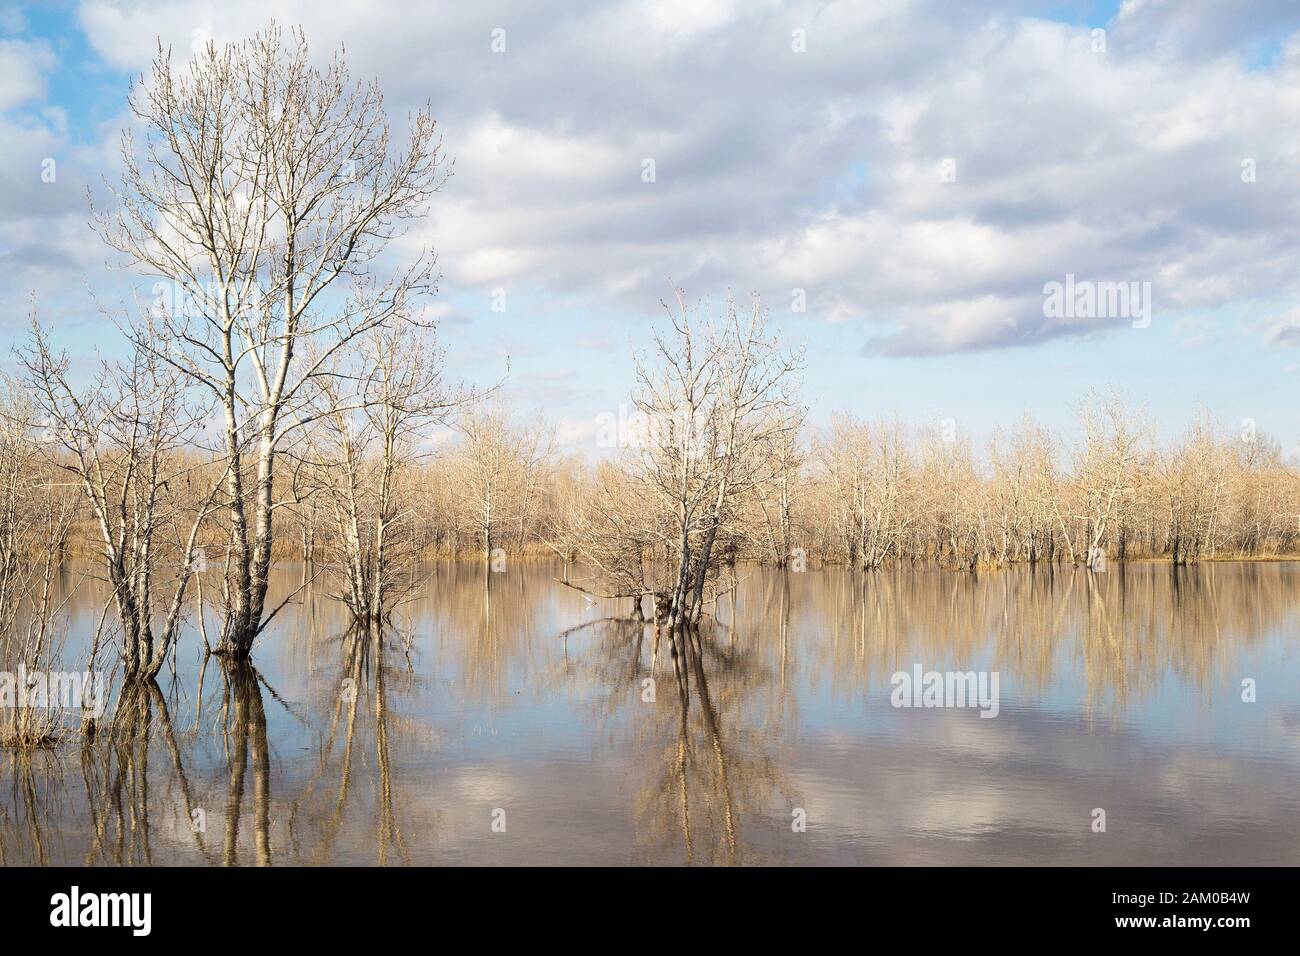 Temporary lake created by seasonal spring flooding Stock Photo